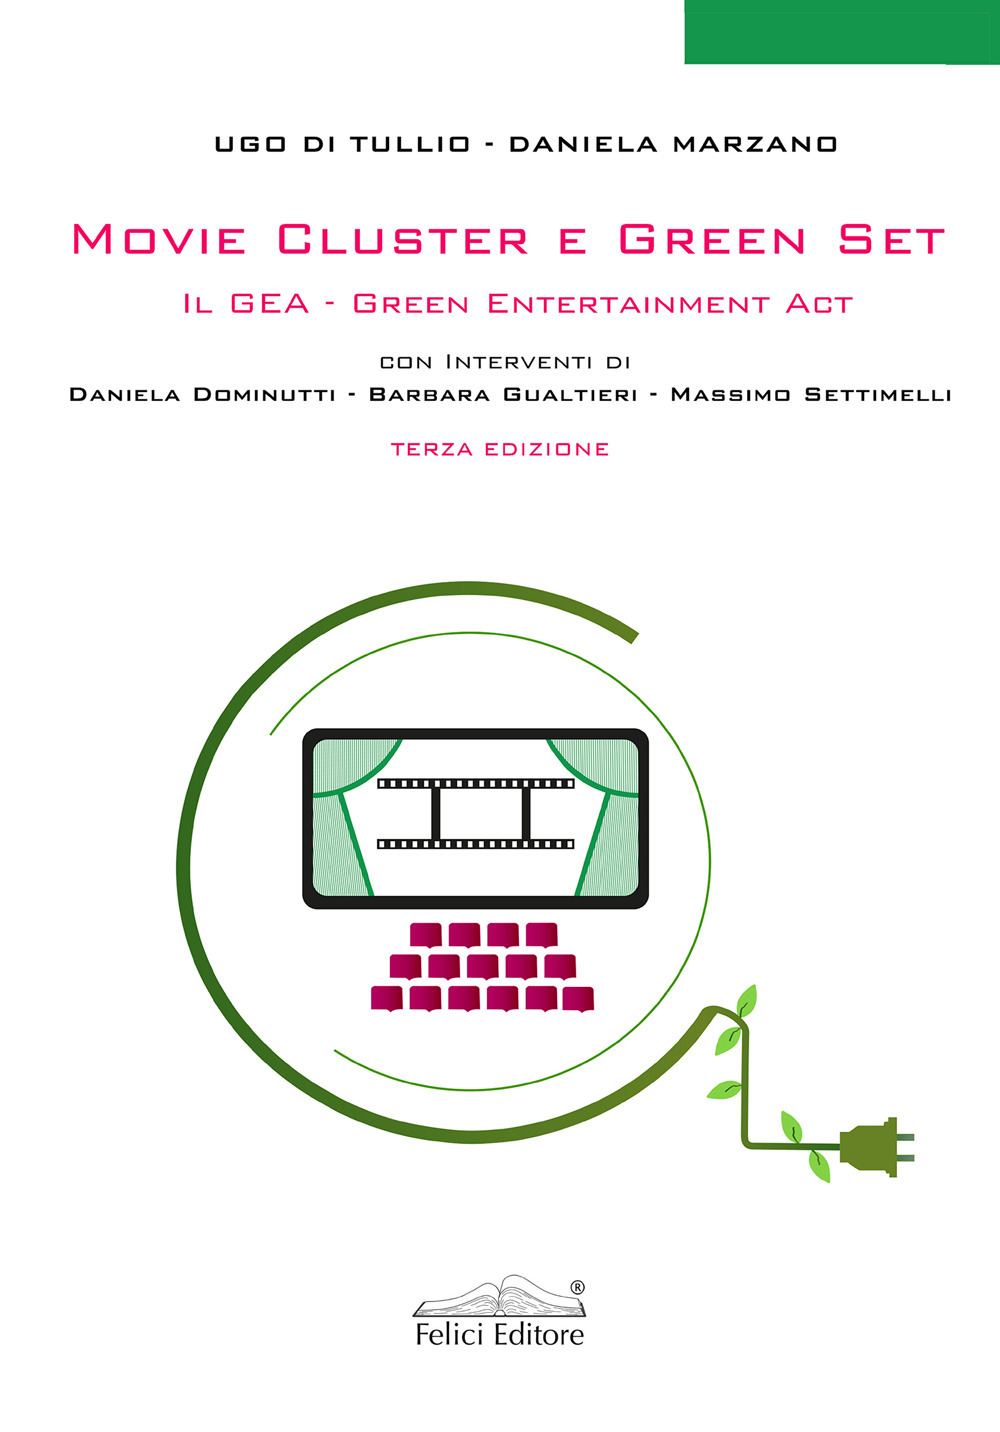 Movie Cluster e green set. Il Gea Green Entertainment Act